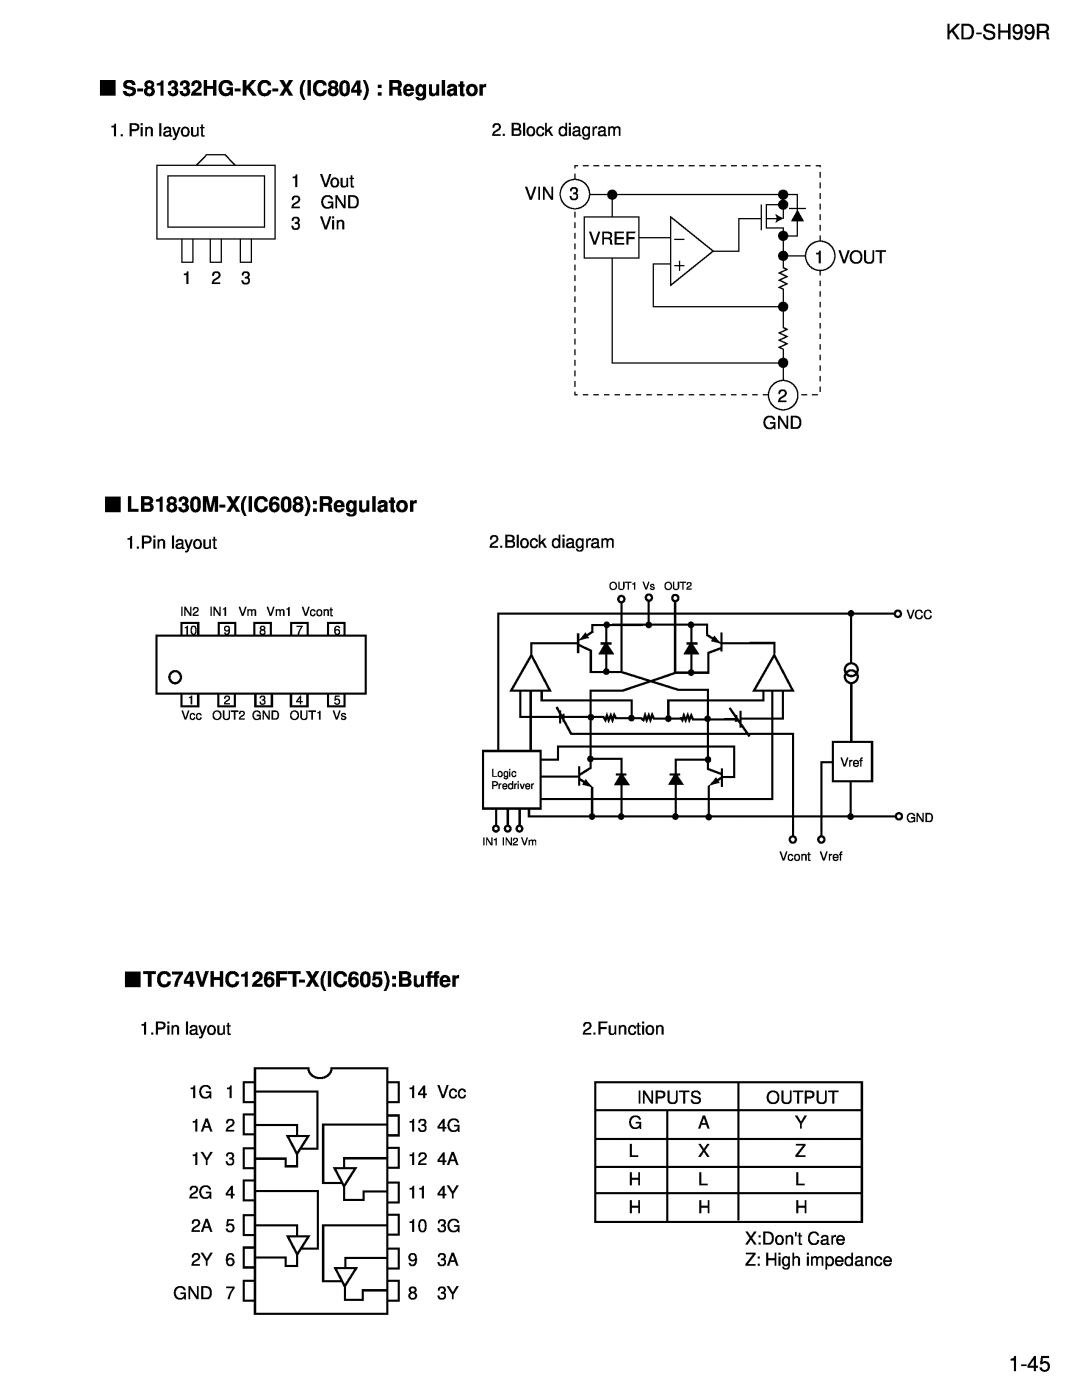 JVC KD-SH99R service manual S-81332HG-KC-XIC804 Regulator, LB1830M-XIC608 Regulator, TC74VHC126FT-XIC605 Buffer, 1-45 